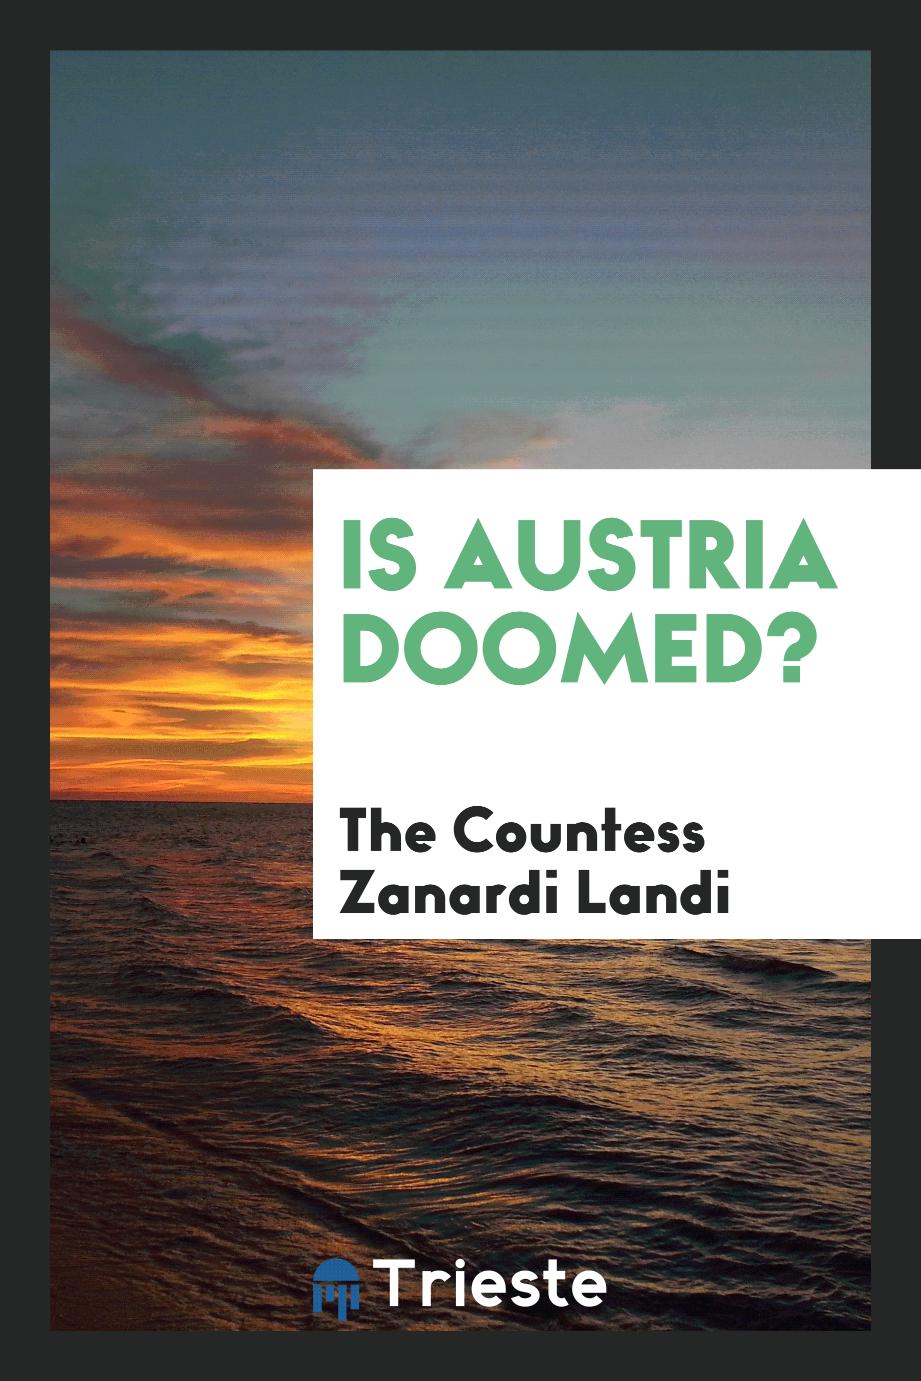 Is Austria doomed?